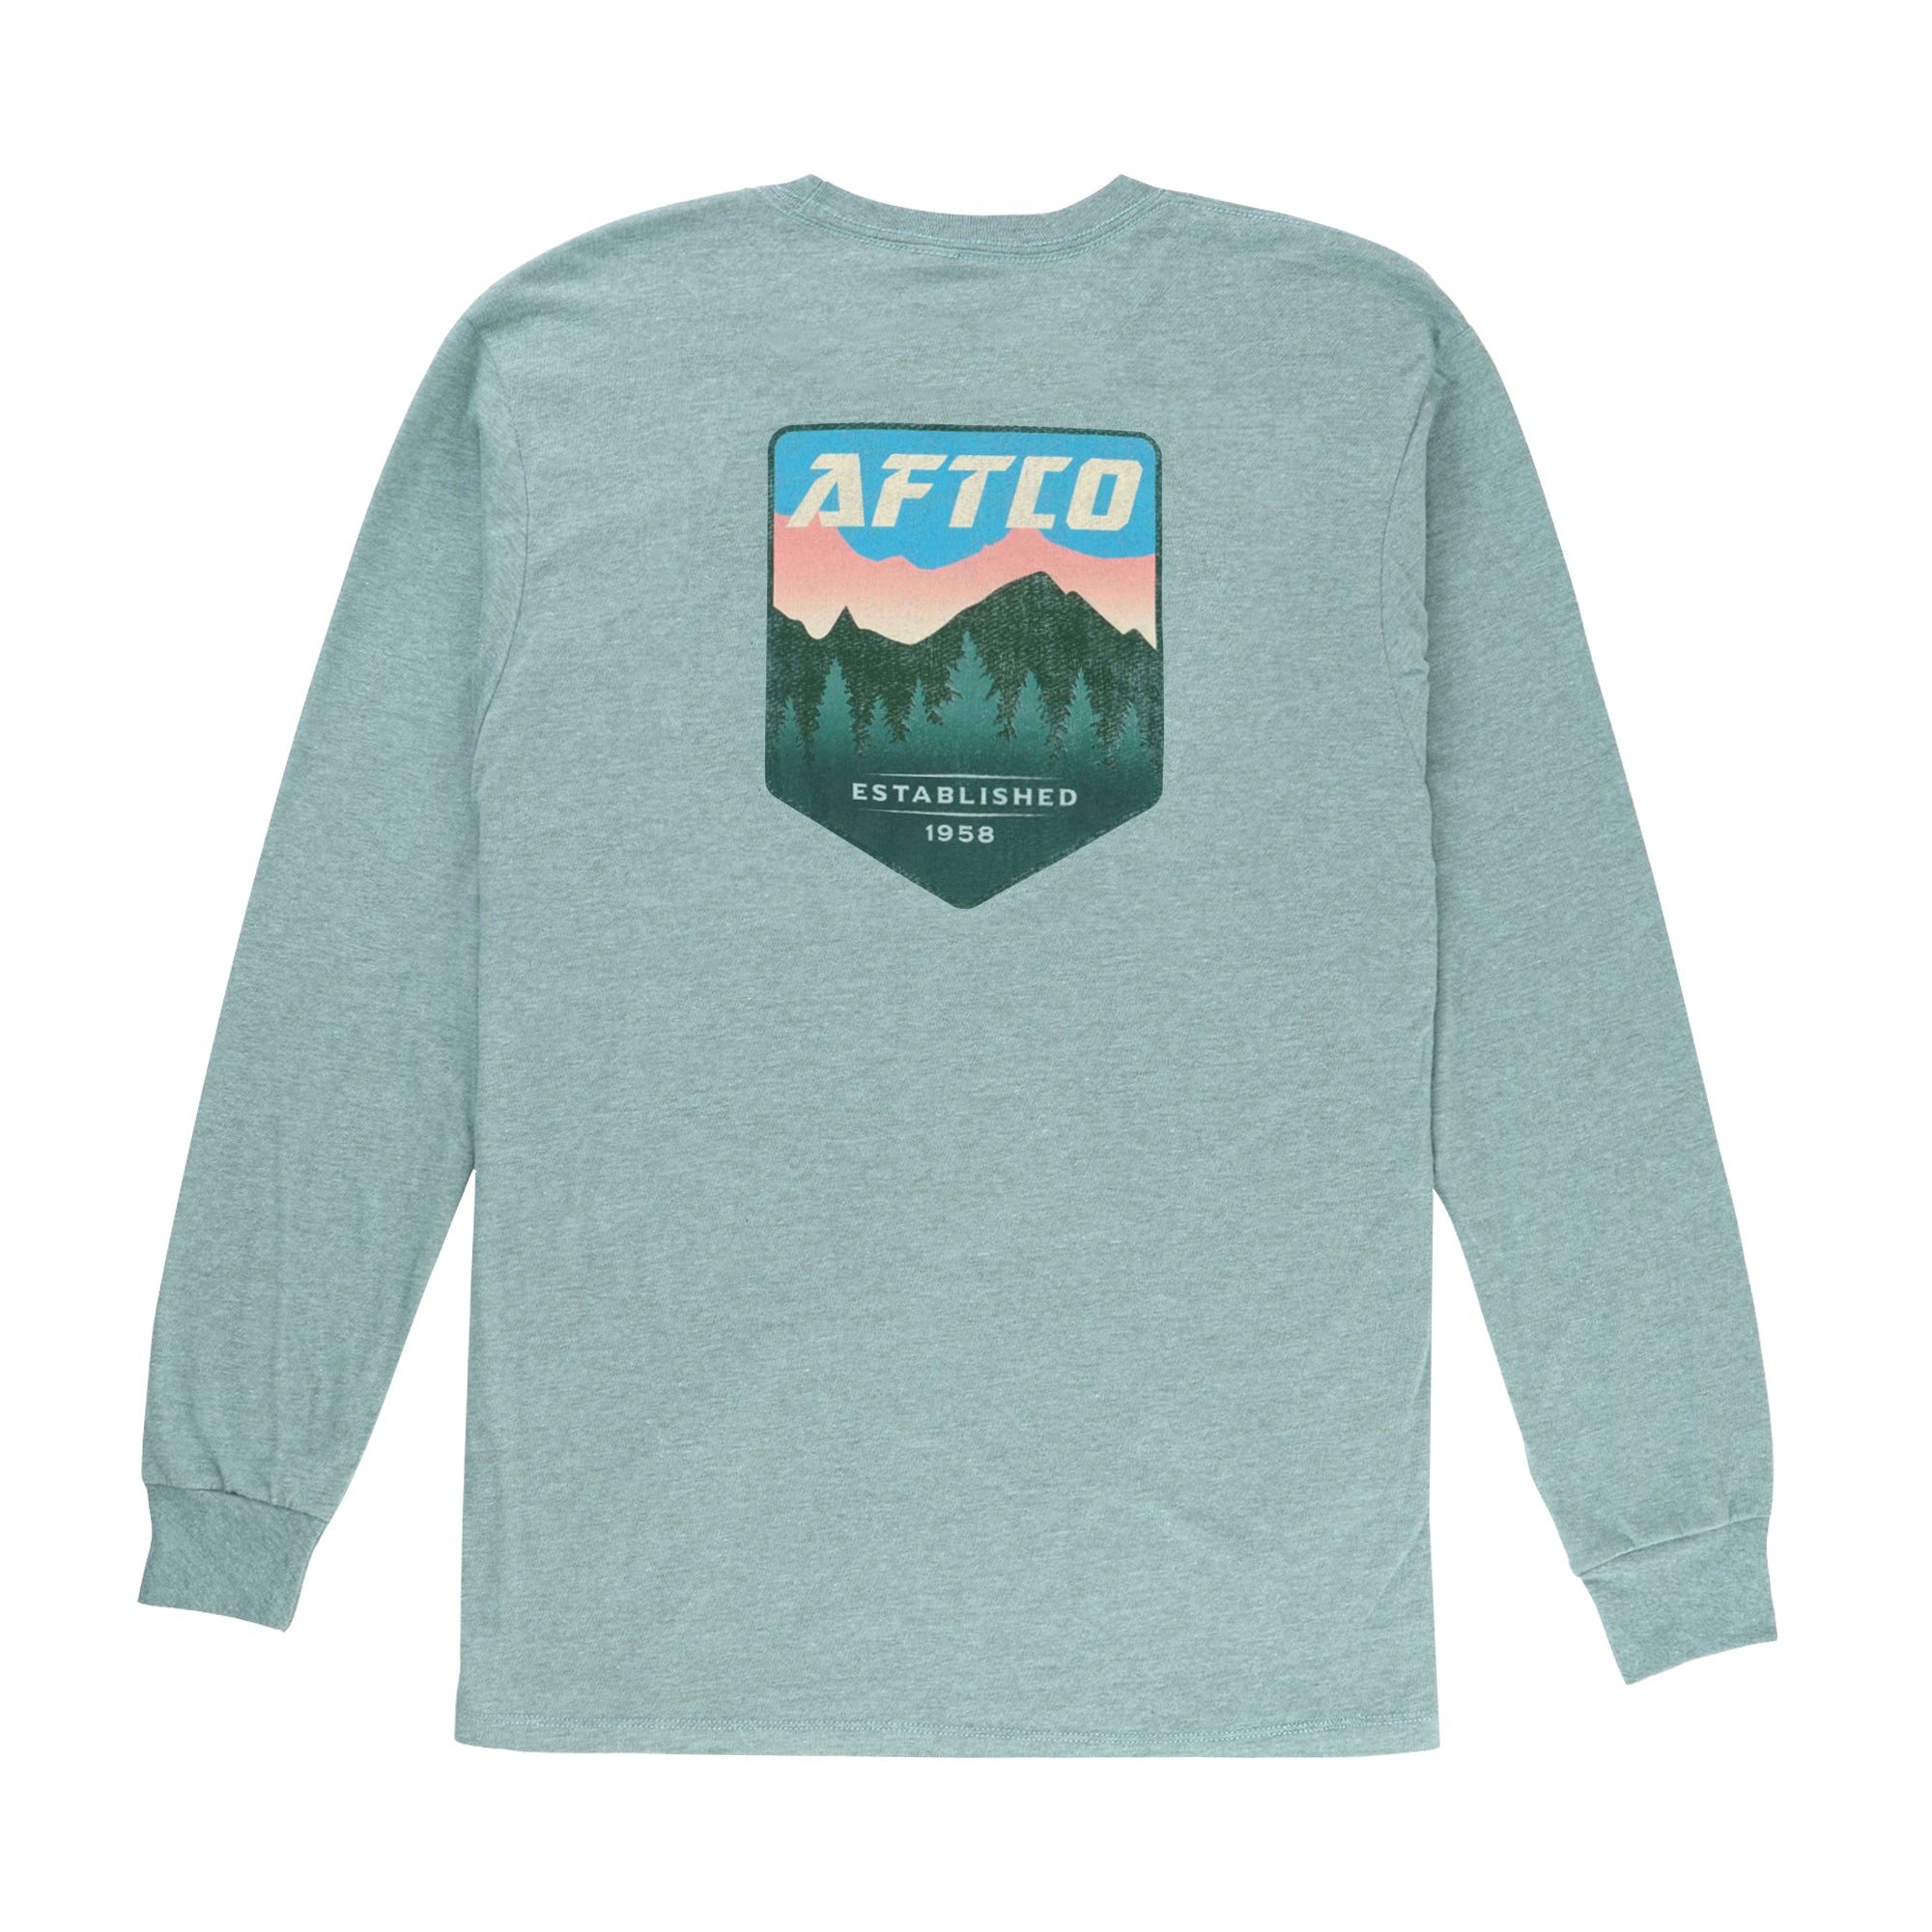 AFTCO Jigfish Performance T-Shirt - Lt. Grey - X-Large at